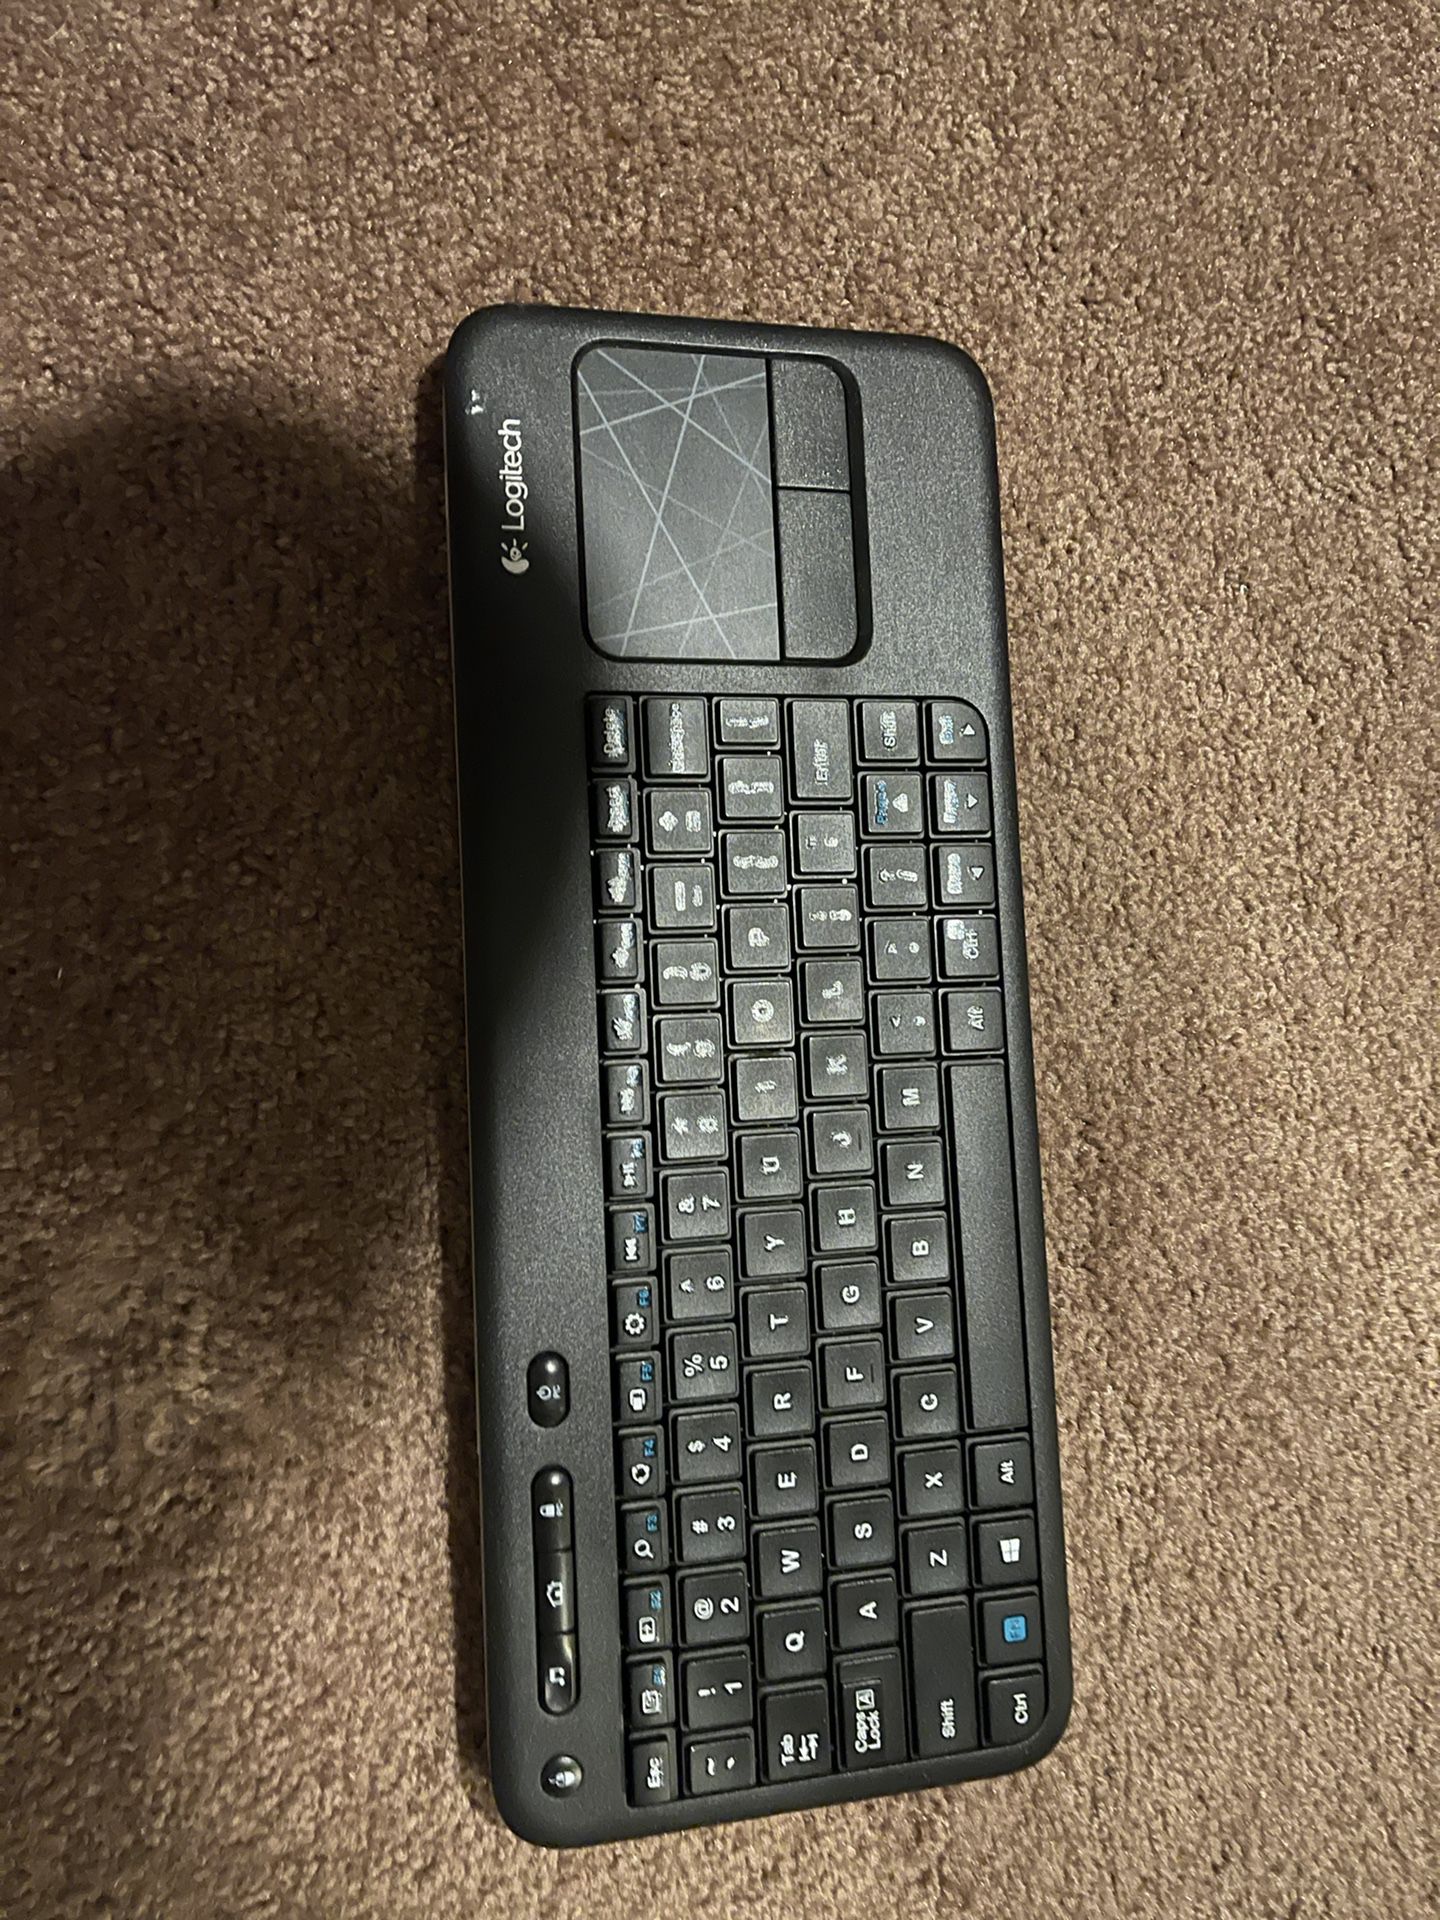 Toshiba Laptop, Wireless Keyboard